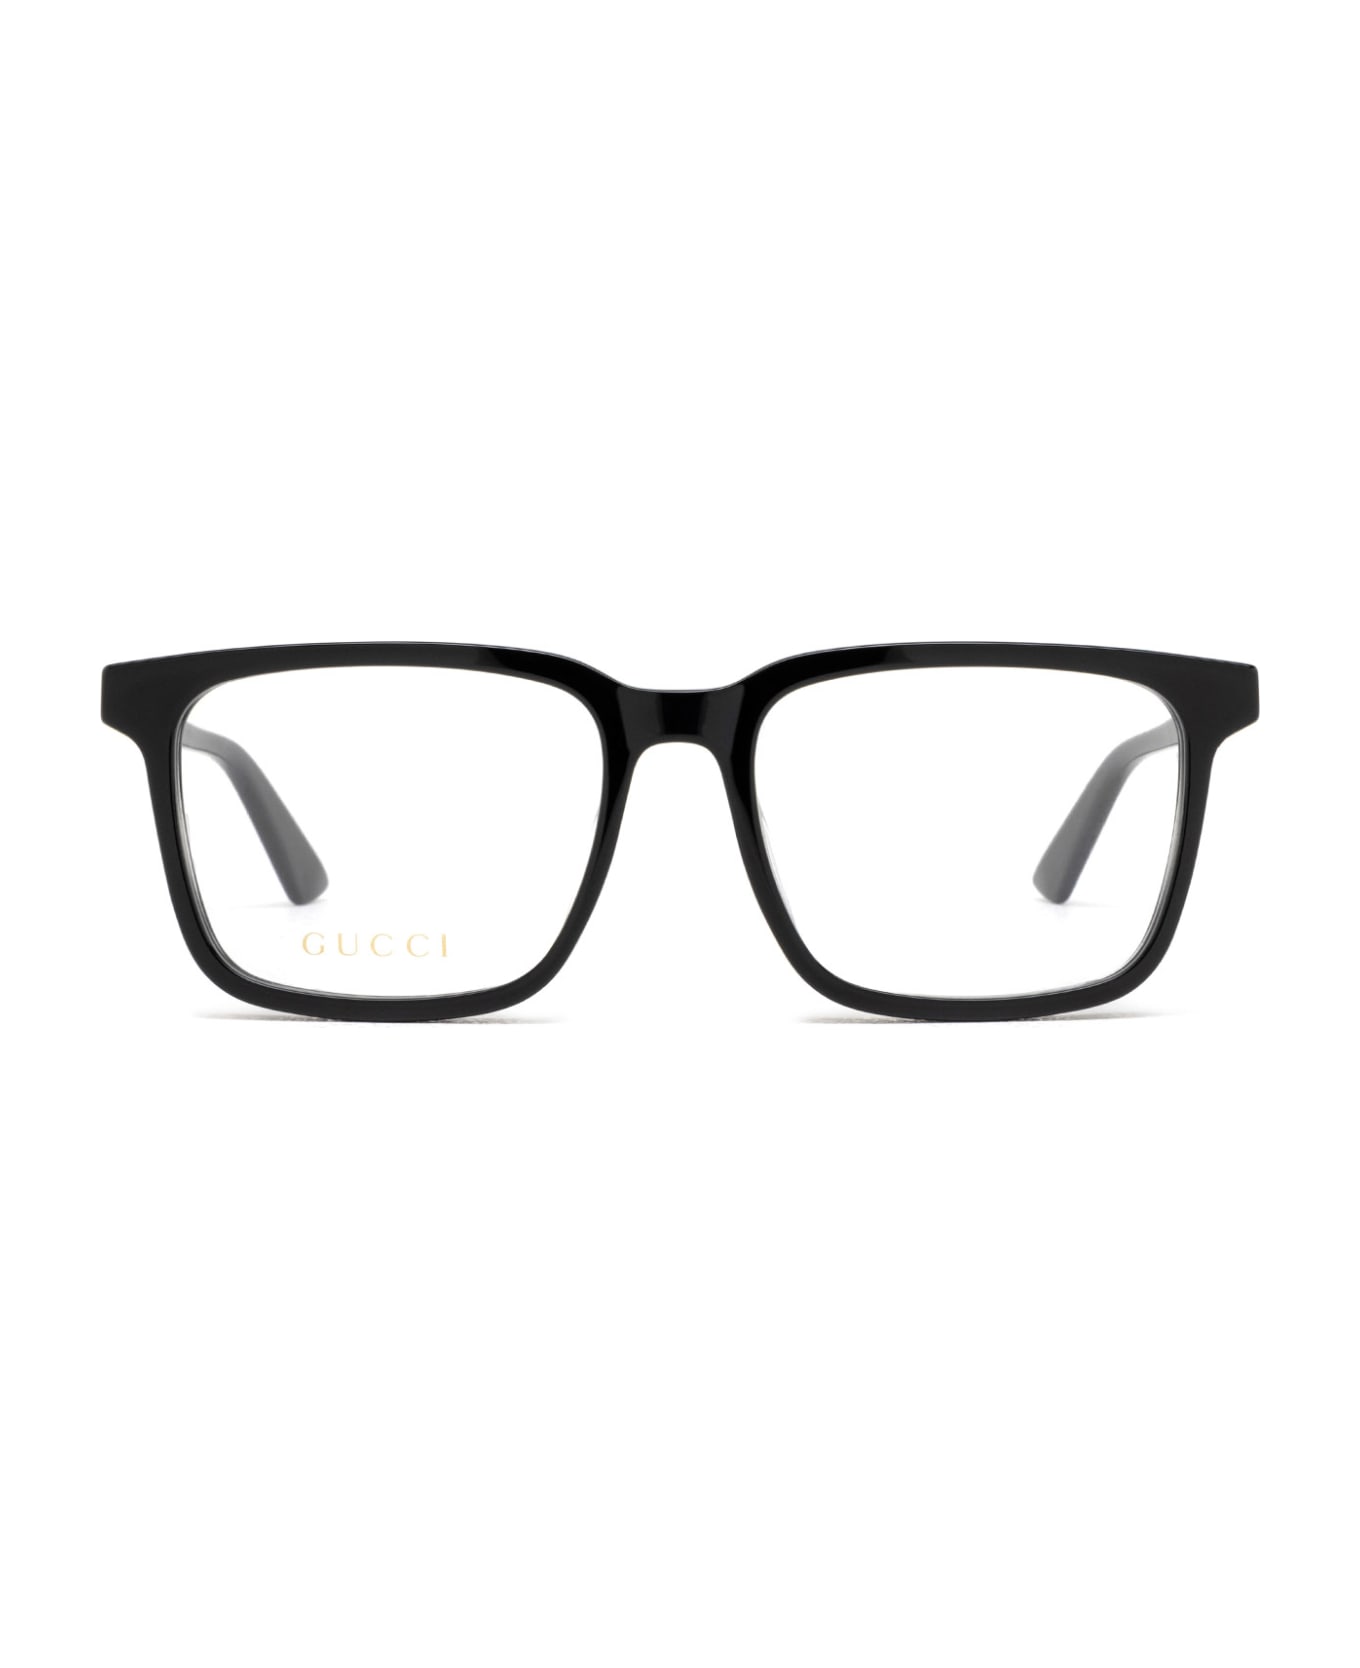 Gucci Eyewear Gg1120oa Black Glasses - Black アイウェア